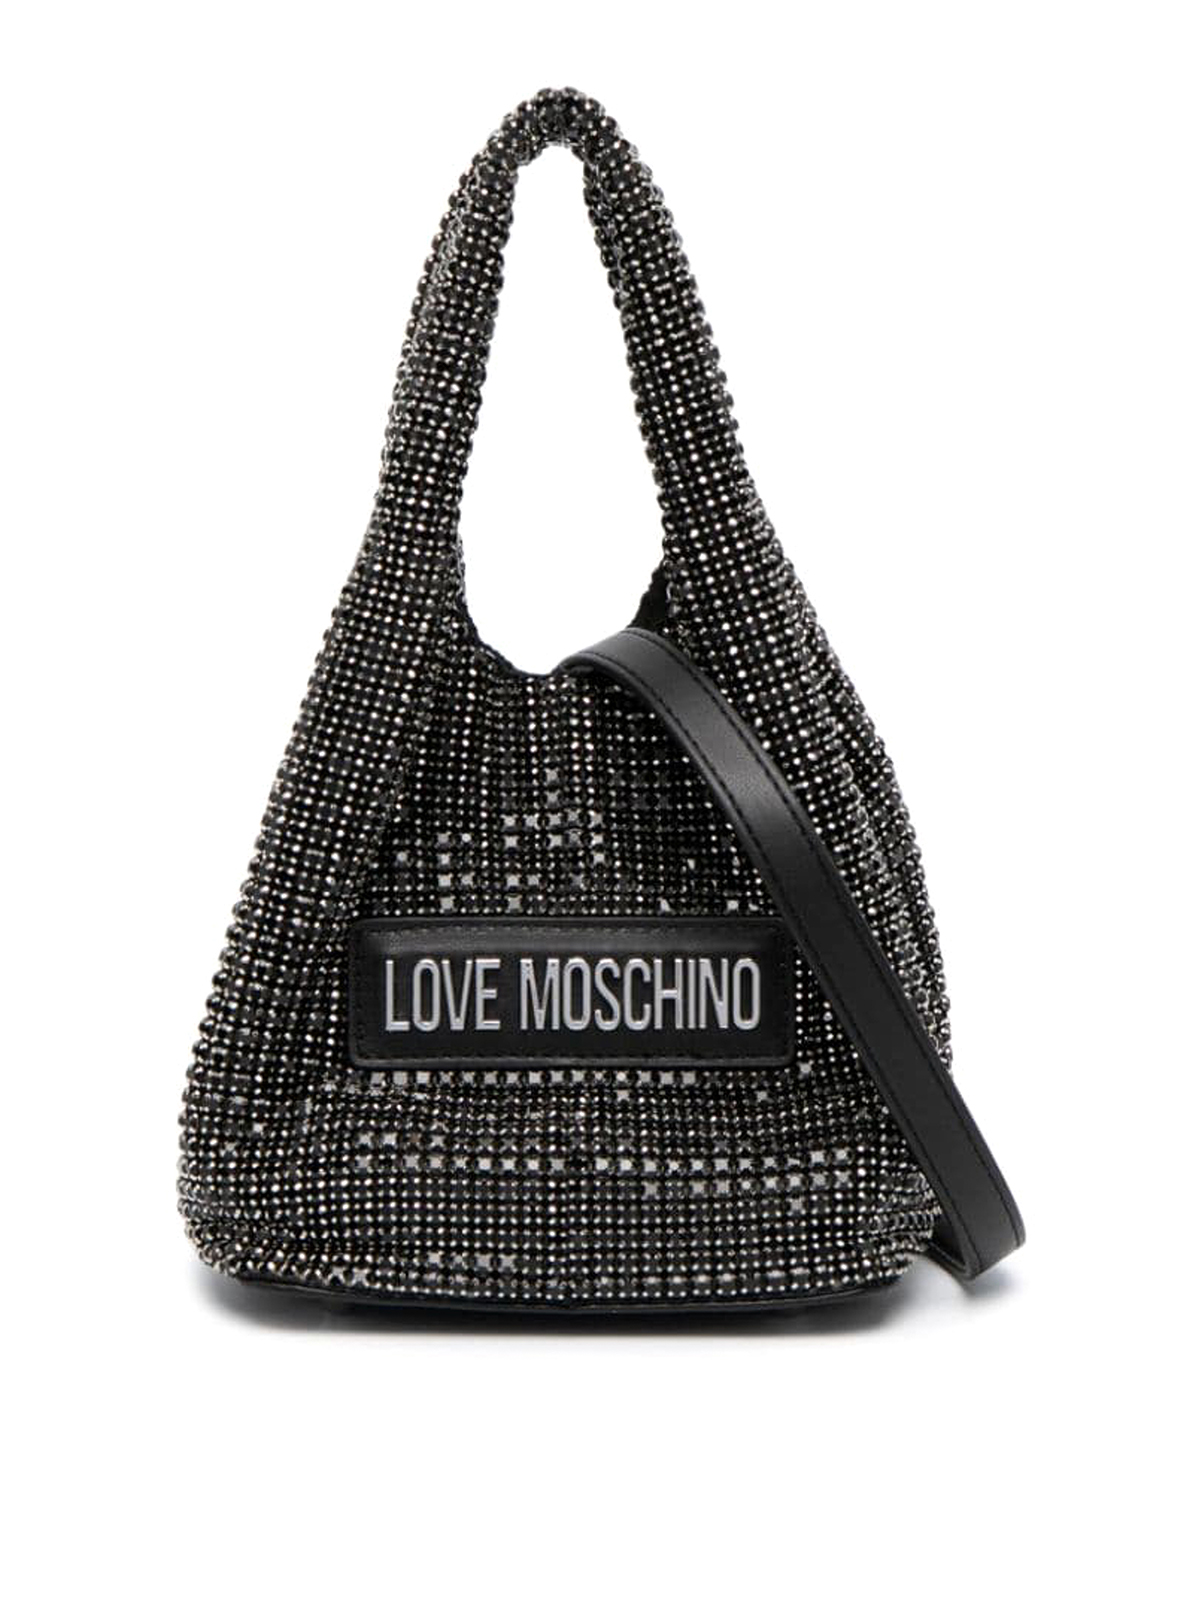 Love Moschino Embellishement Tote Bag In Black